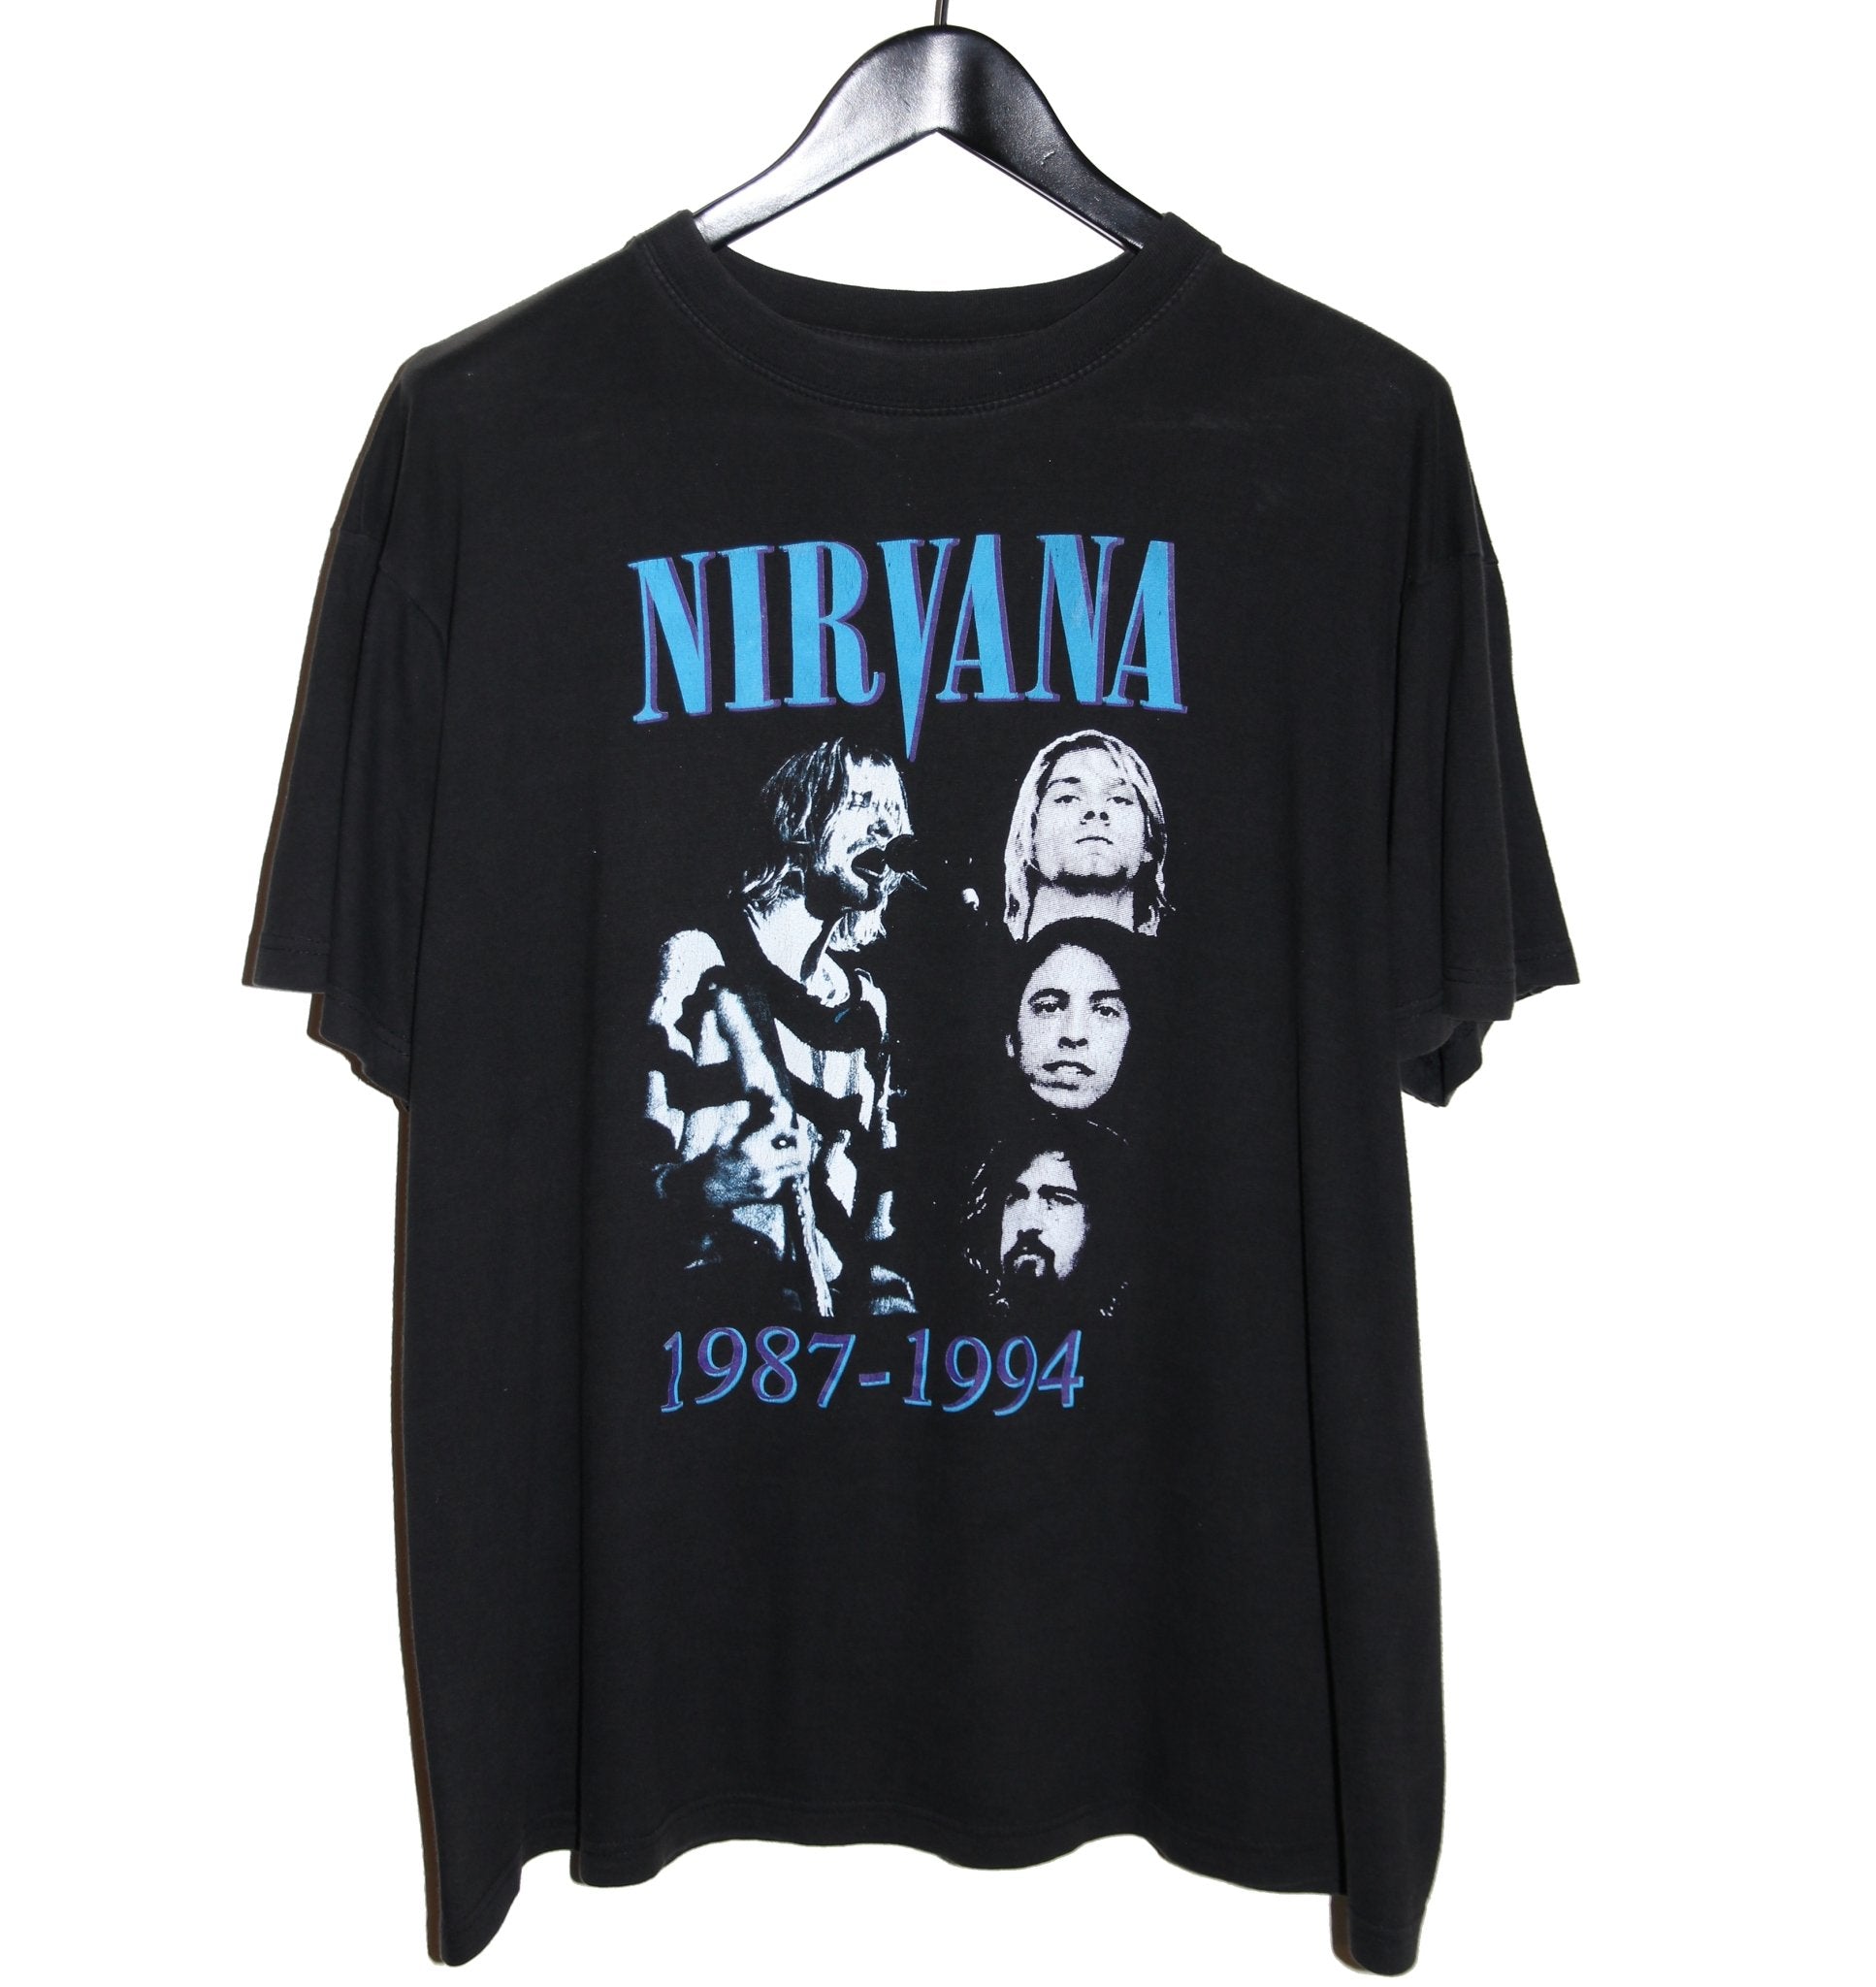 Nirvana 1994 Black Sheep Shirt - Faded AU